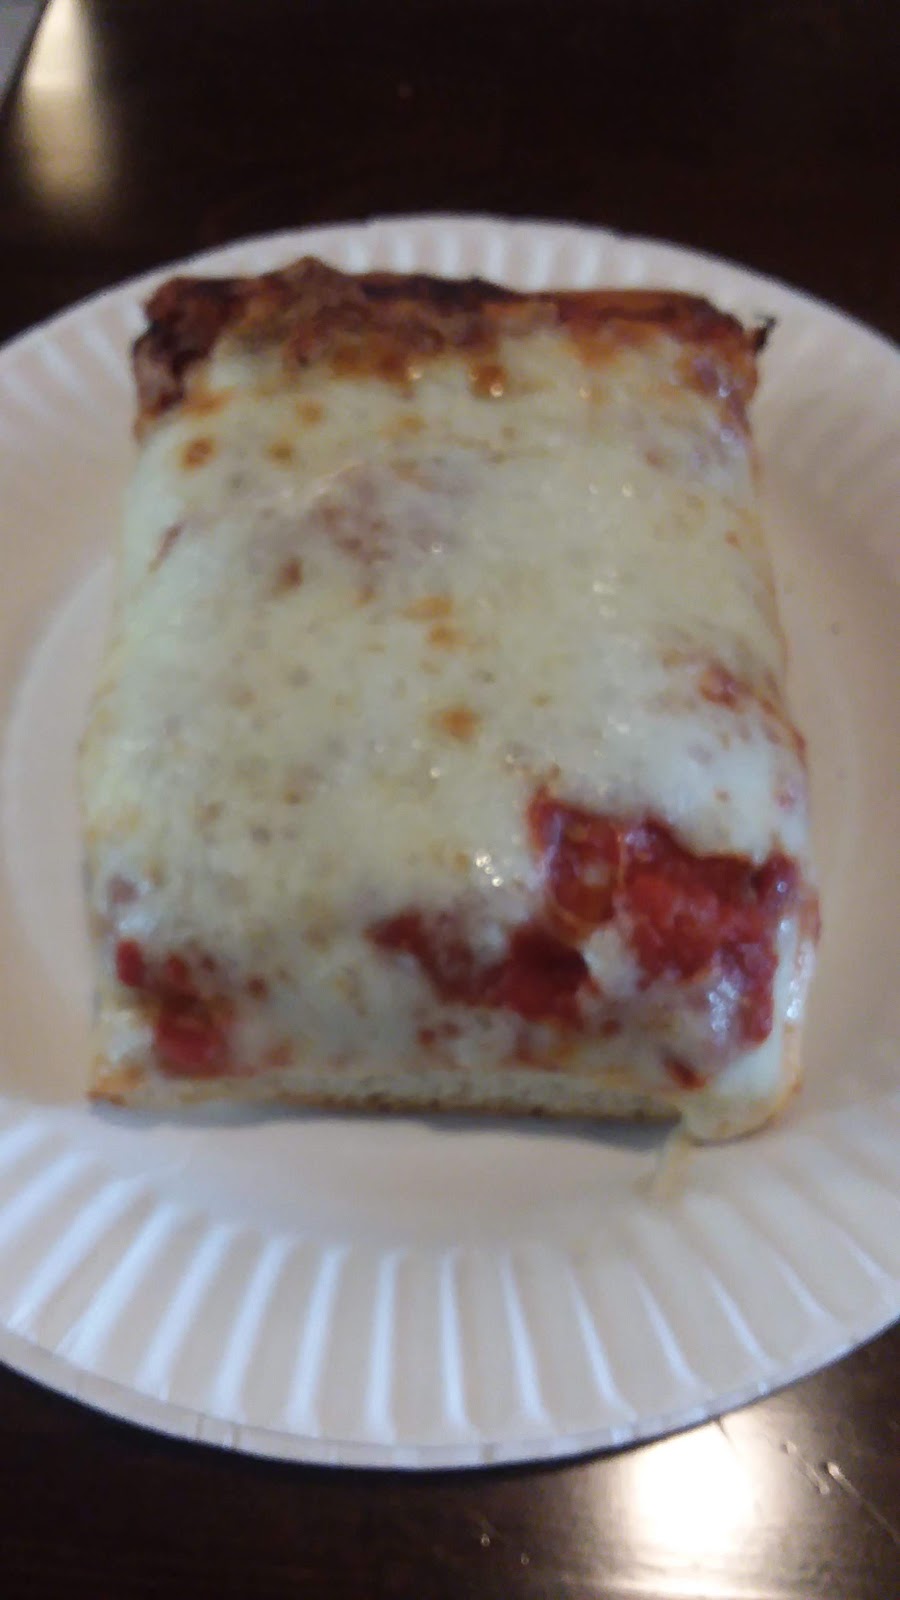 Calabria Pizza | 36 W Ramapo Rd, Garnerville, NY 10923 | Phone: (845) 553-9888